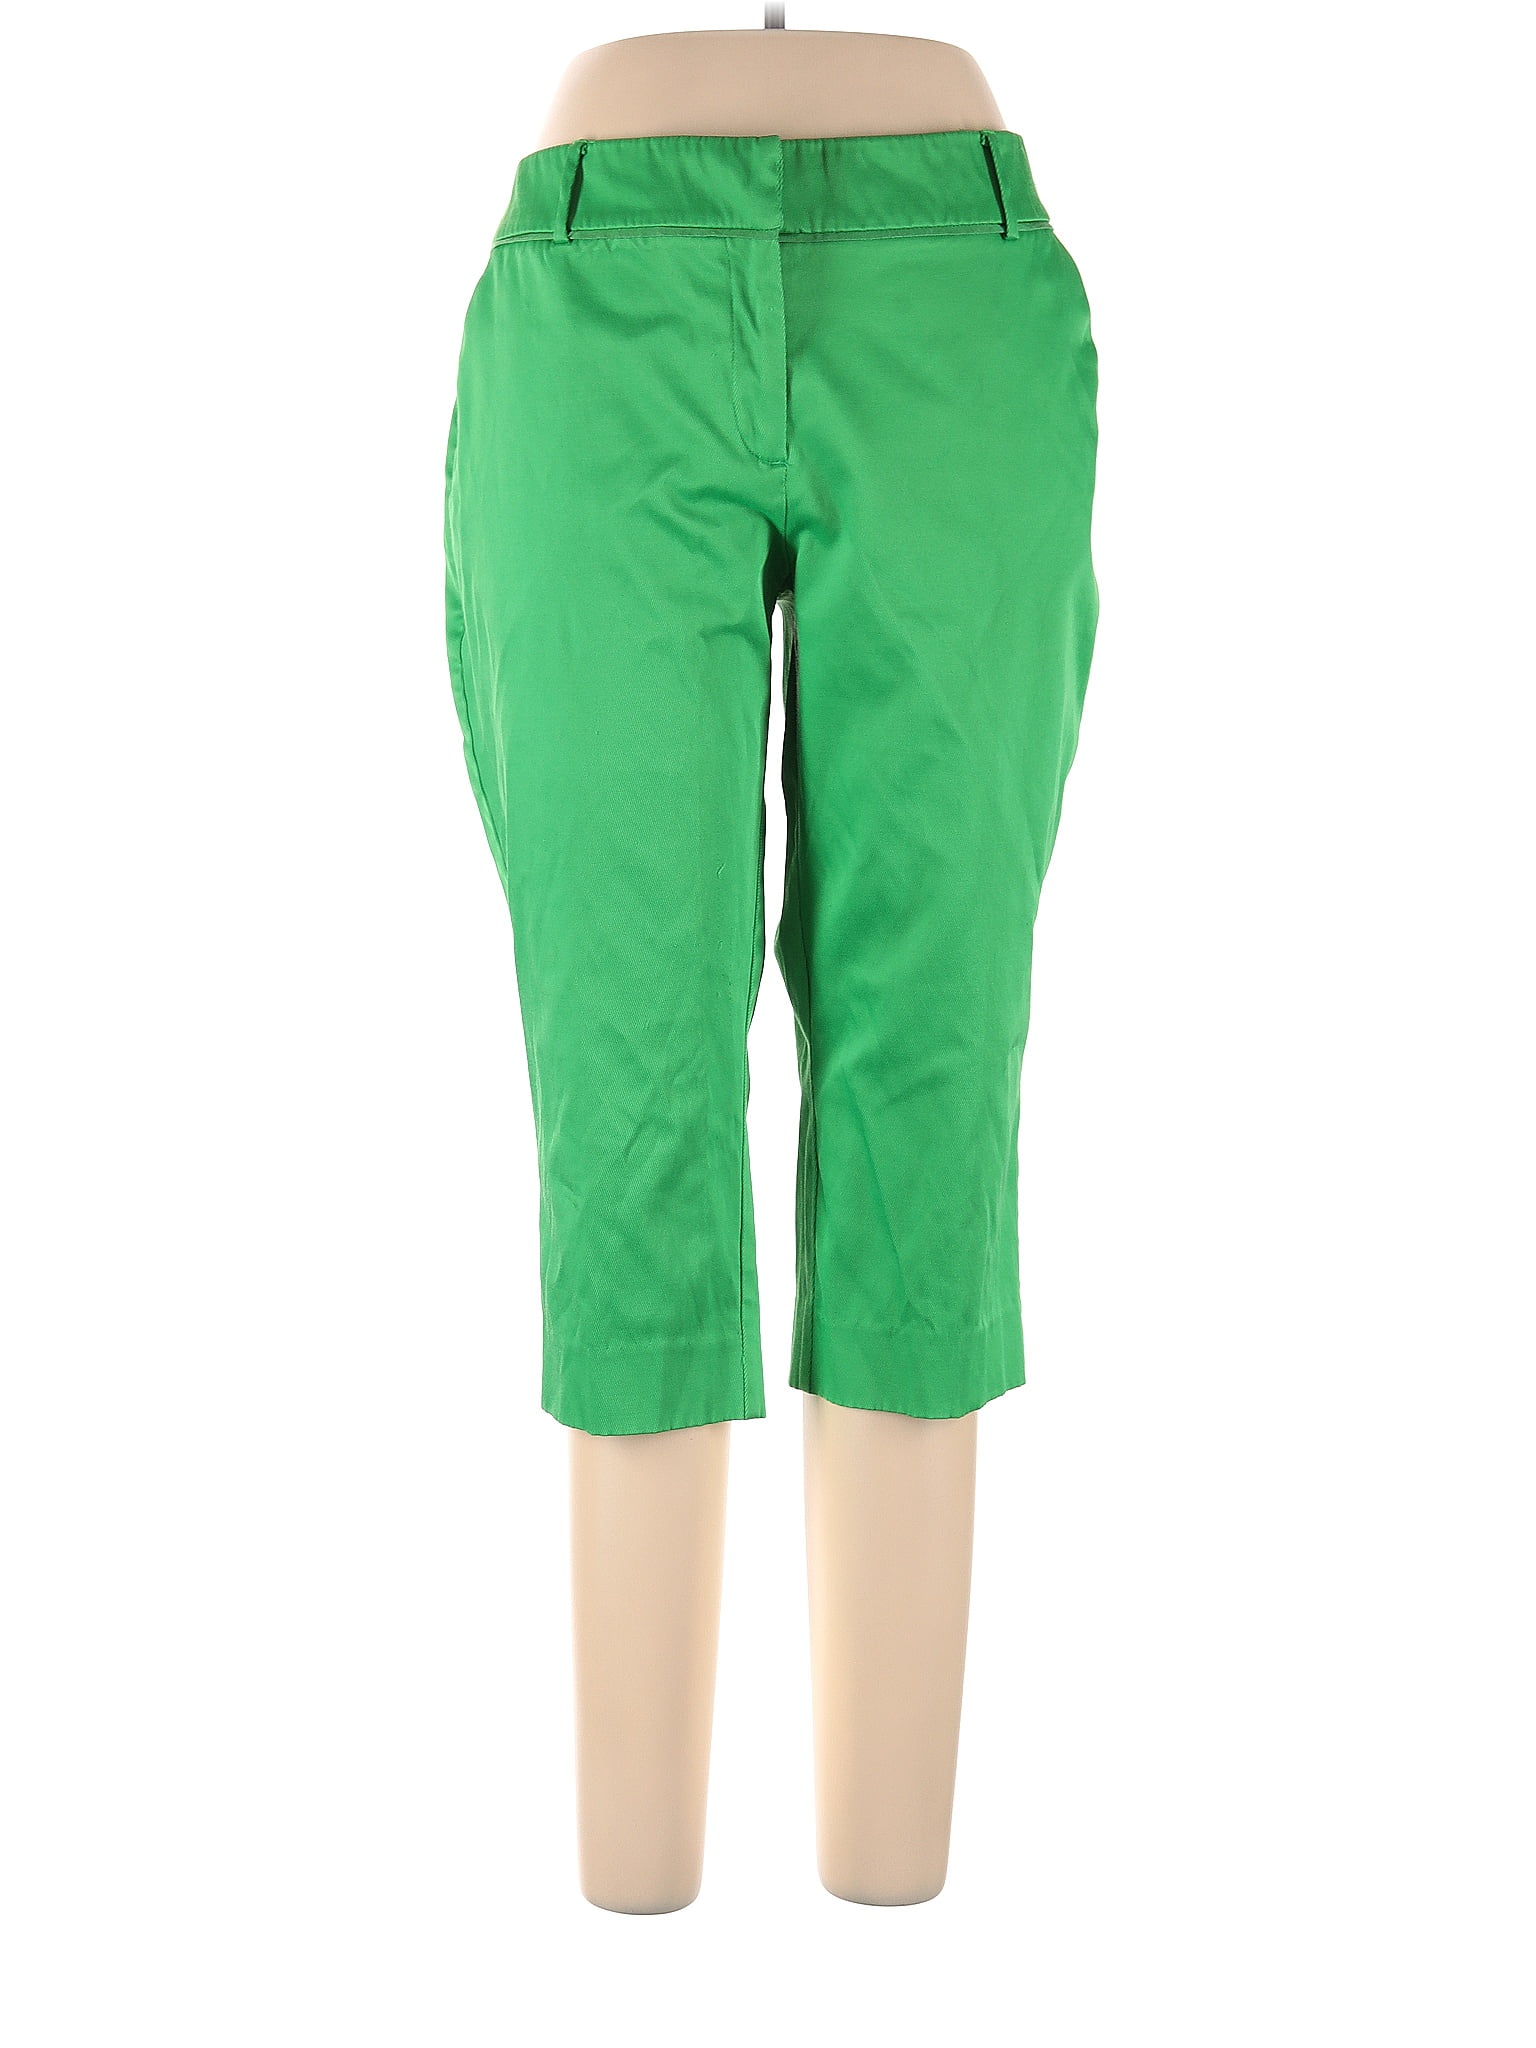 New York & Company 7th Avenue Womens Size 14 Cropped Capri Pants